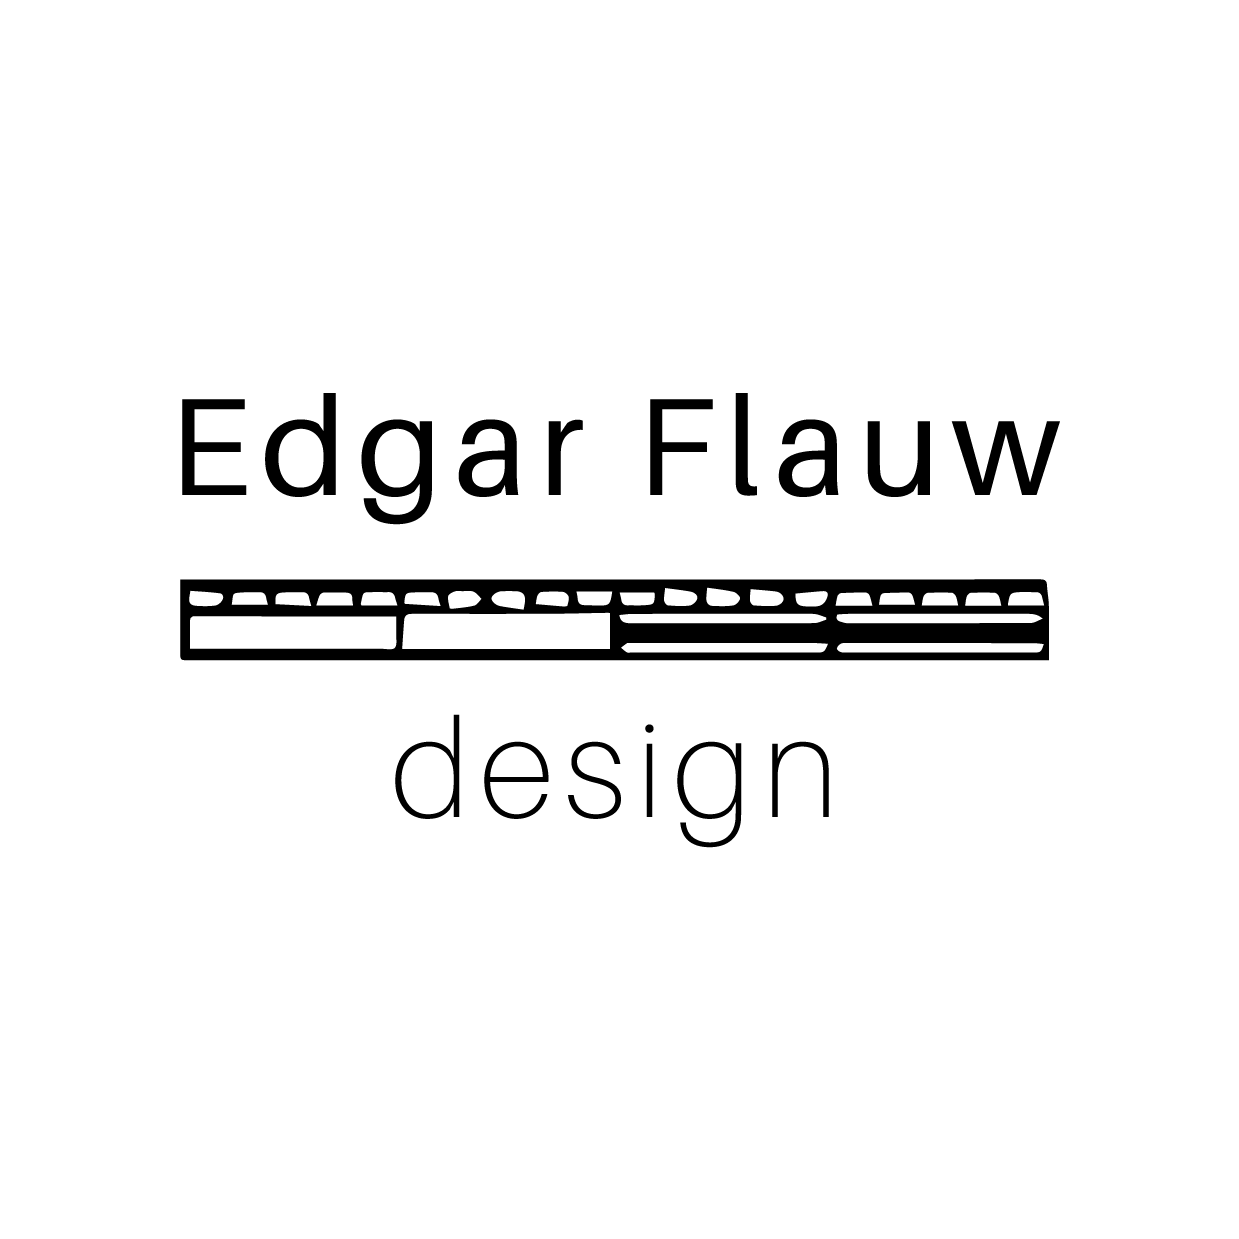 Edgar Flauw Design